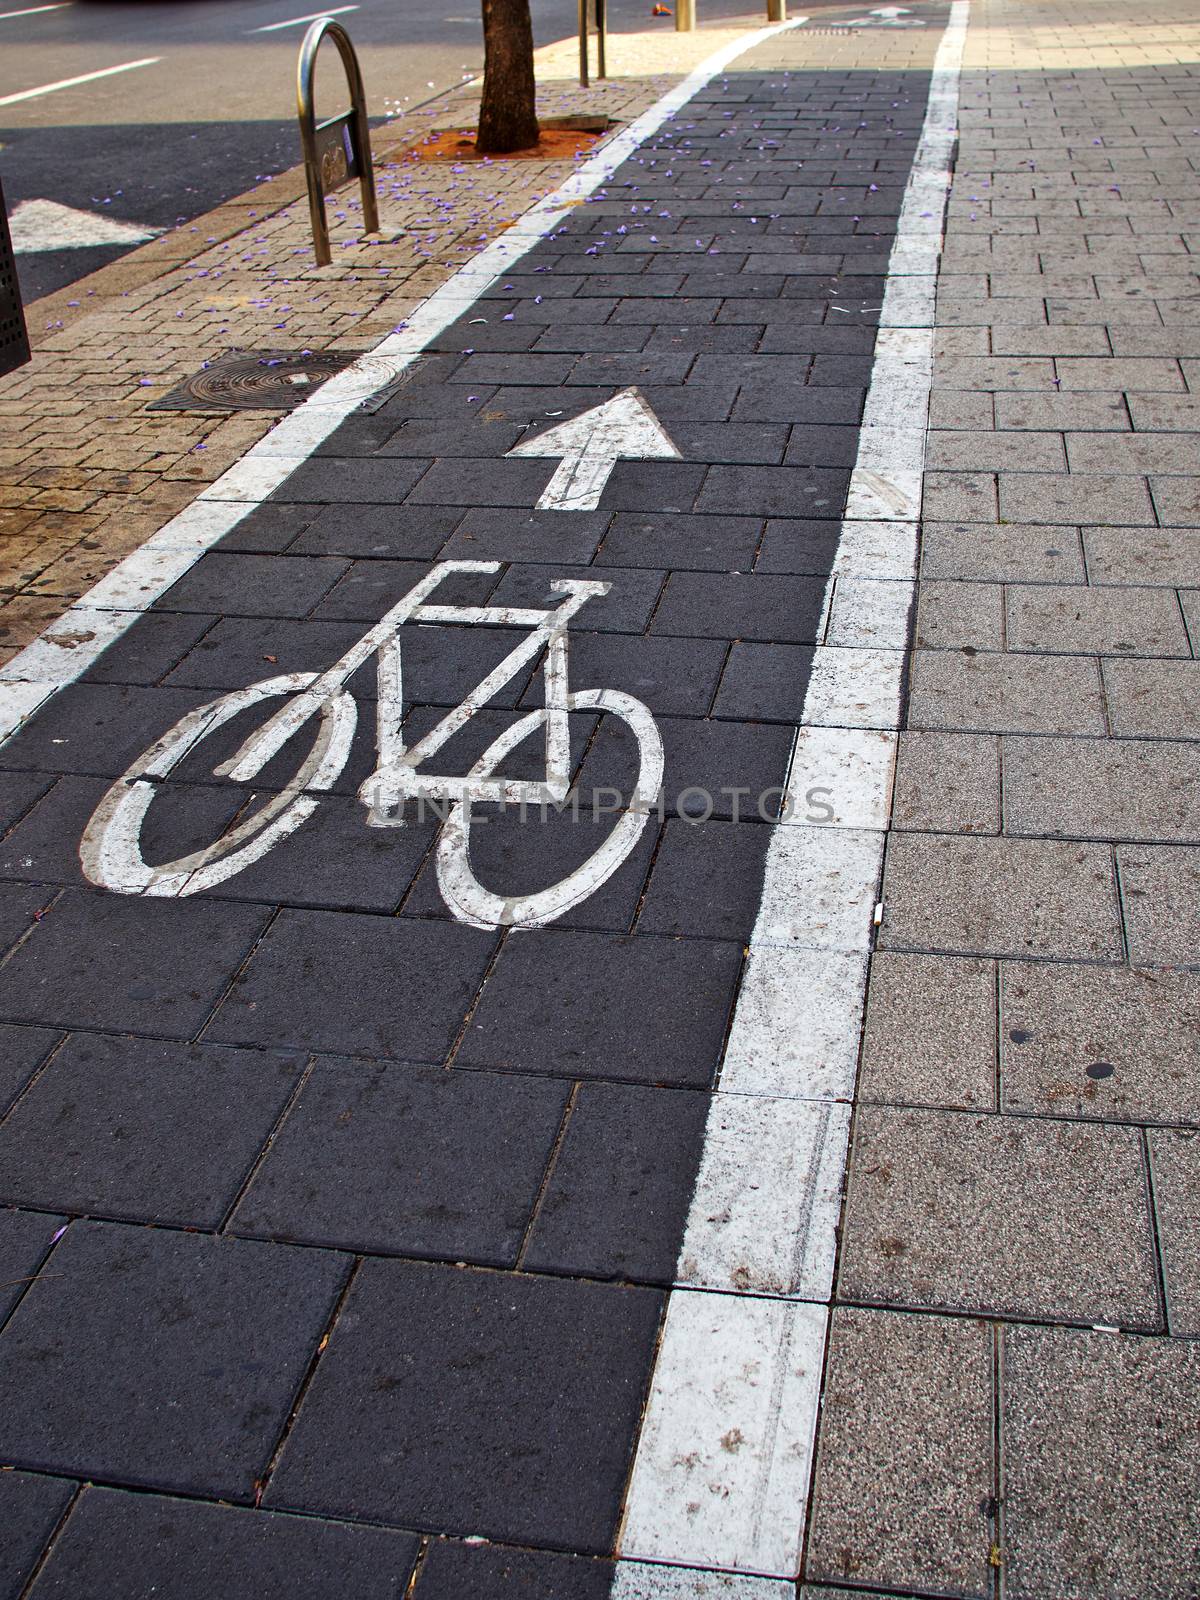 City bicycle bikes lane great urban transportation solution 